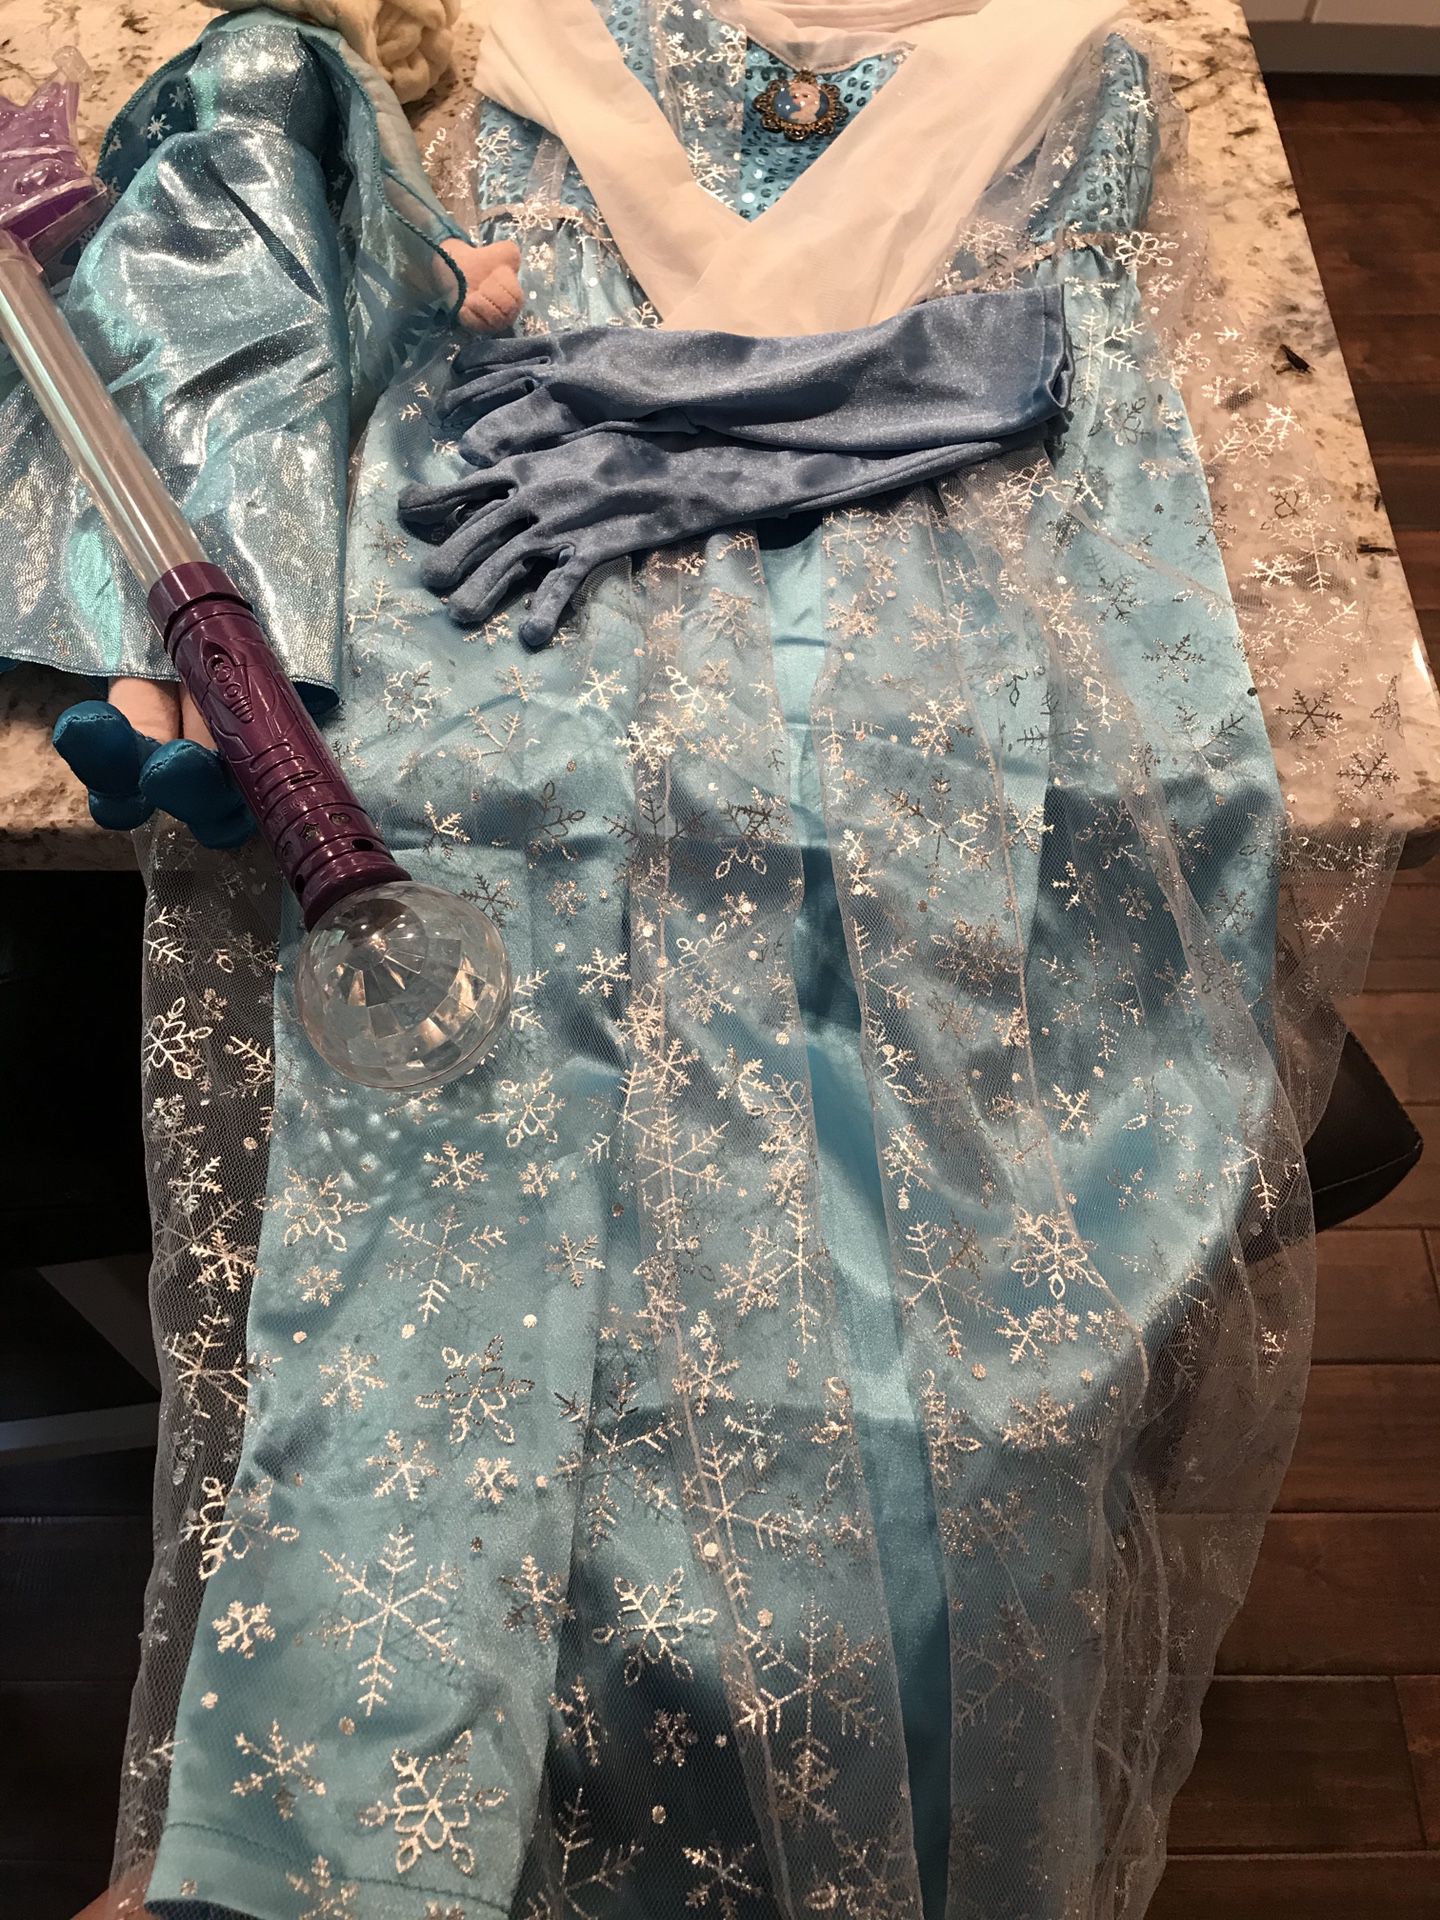 Elsa dress and accessories